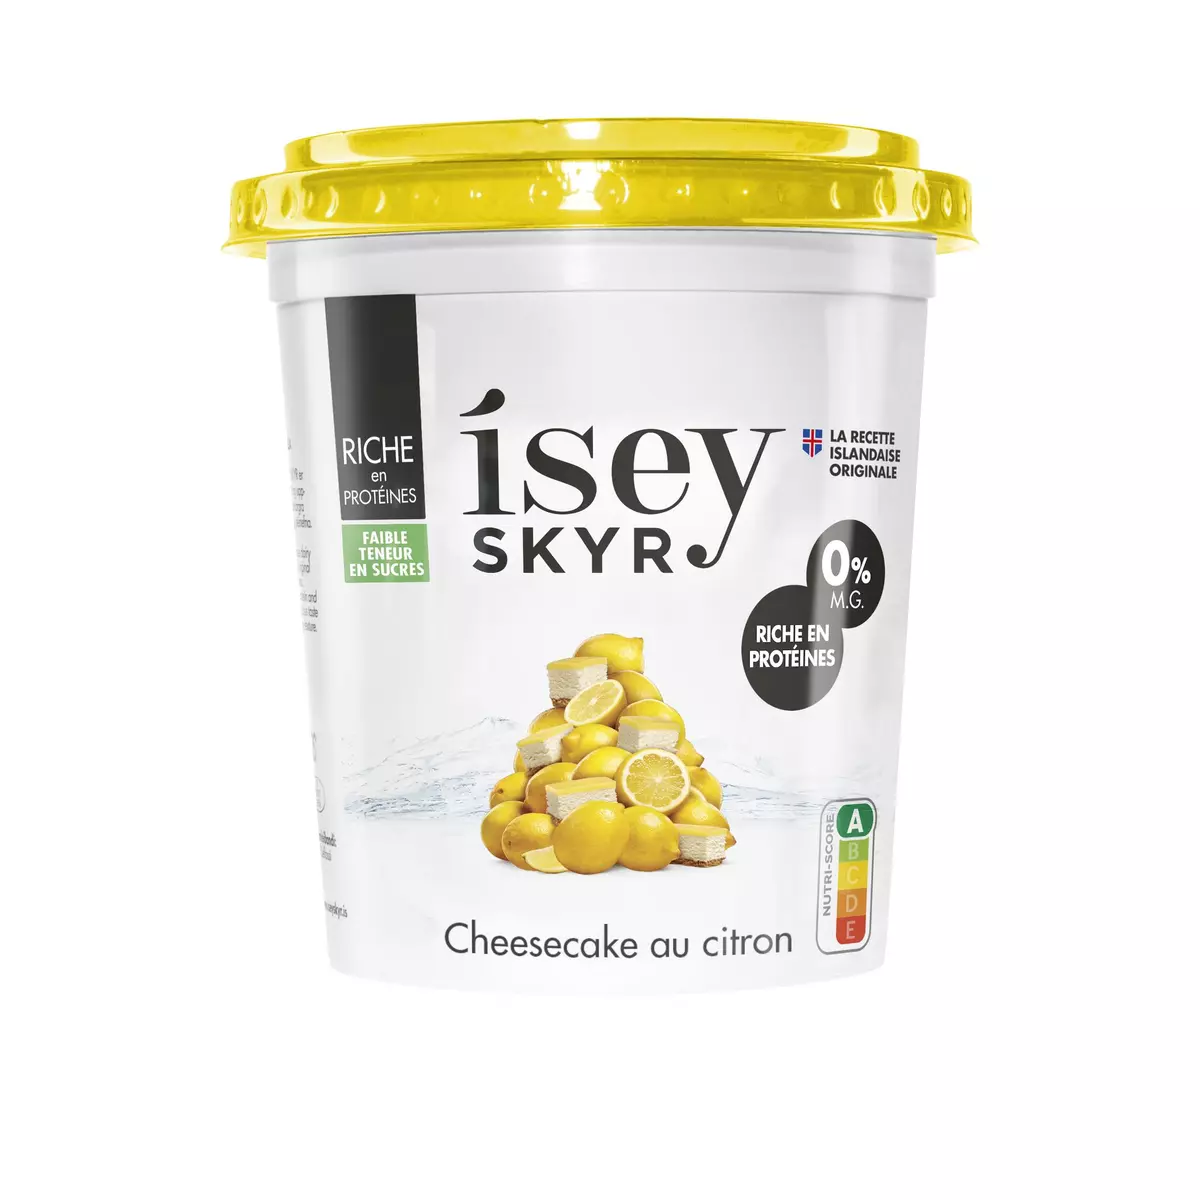 ISEY Skyr cheesecake au citron 0% MG 400g